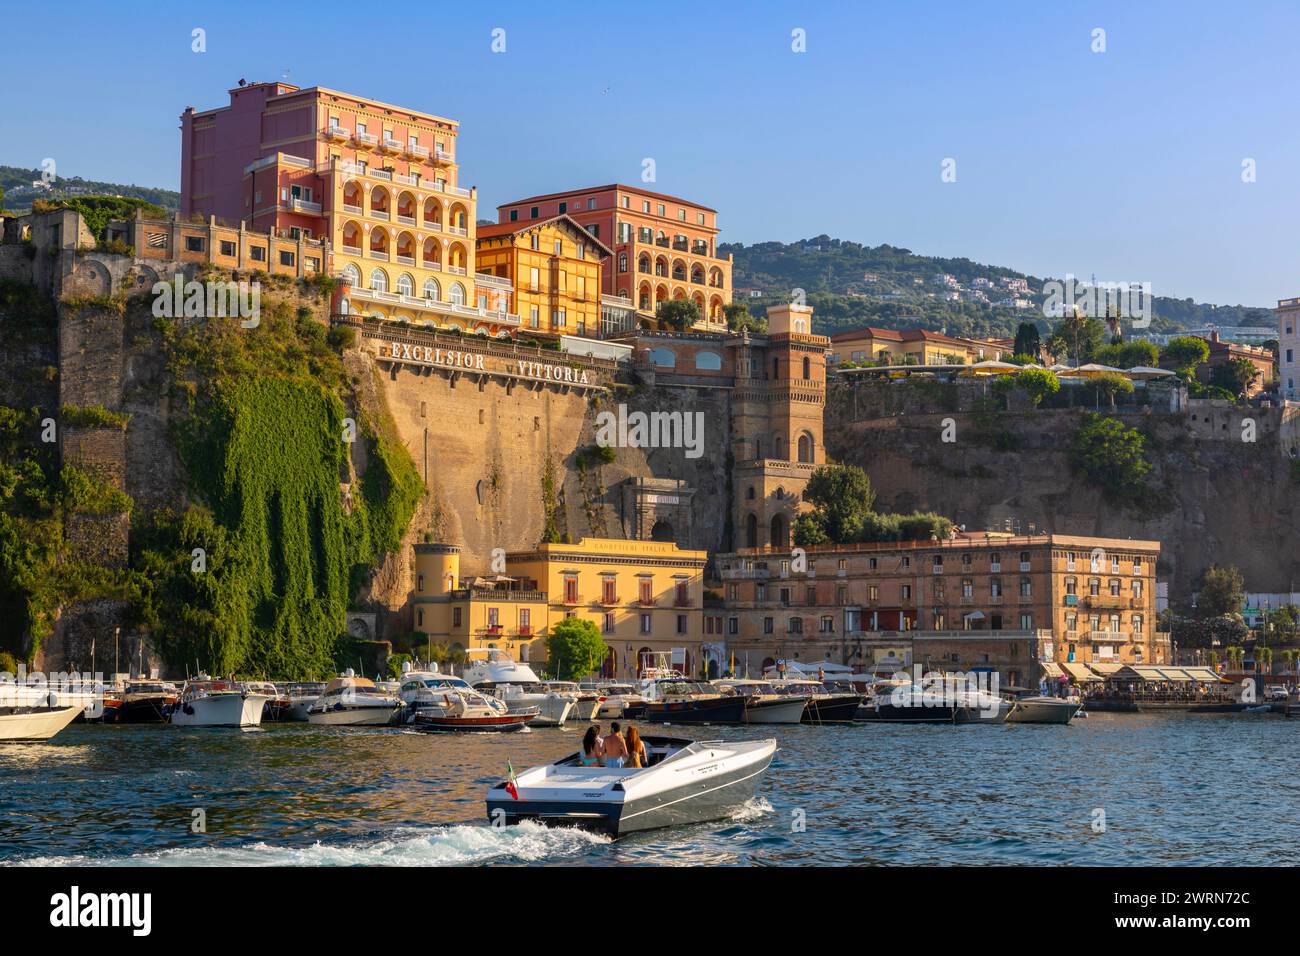 Speeding pleasure boat, Excelsior Vittoria Hotel, Sorrento, Bay of Naples, Campania, Italy, Mediterranean, Europe Copyright: JohnxGuidi 1237-672 Stock Photo